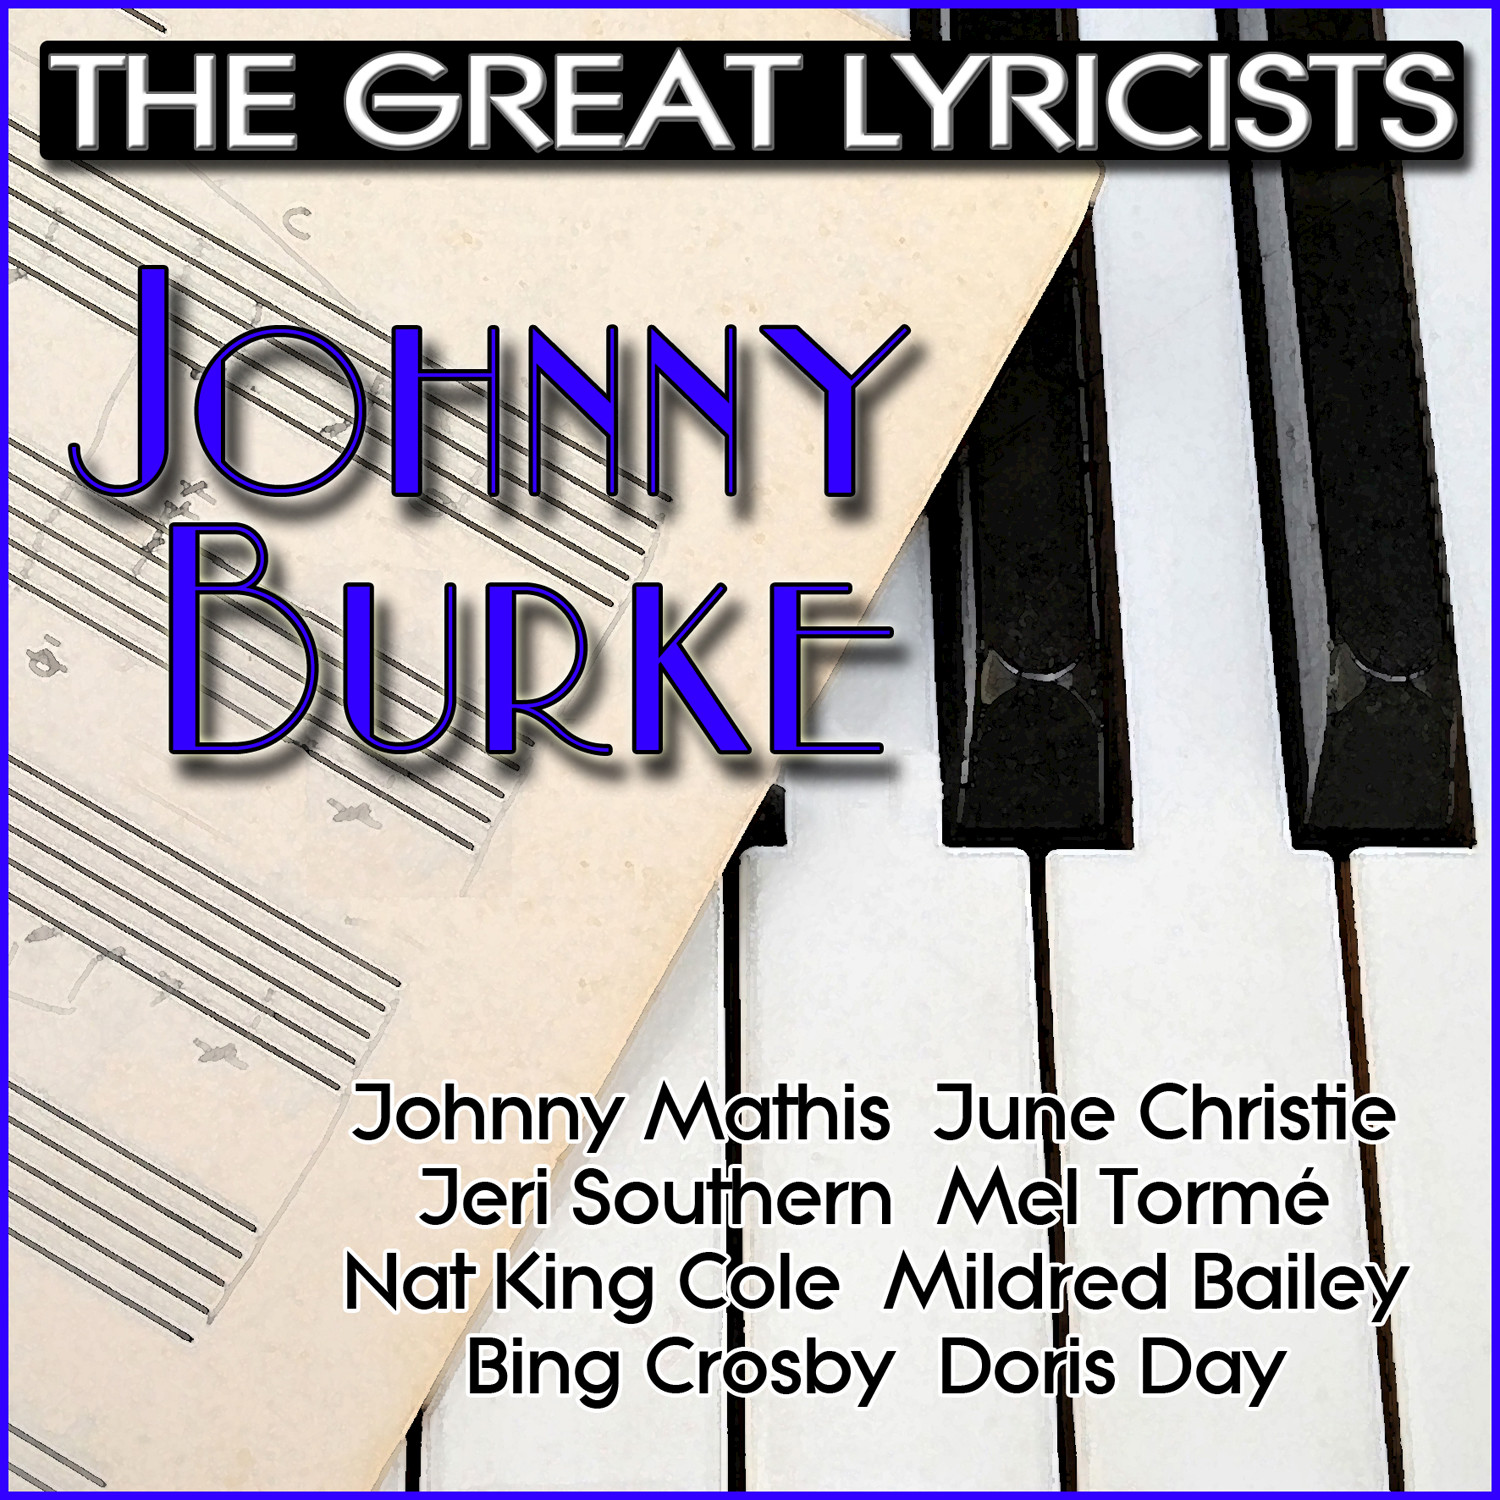 The Great Lyricists – Johnny Burke